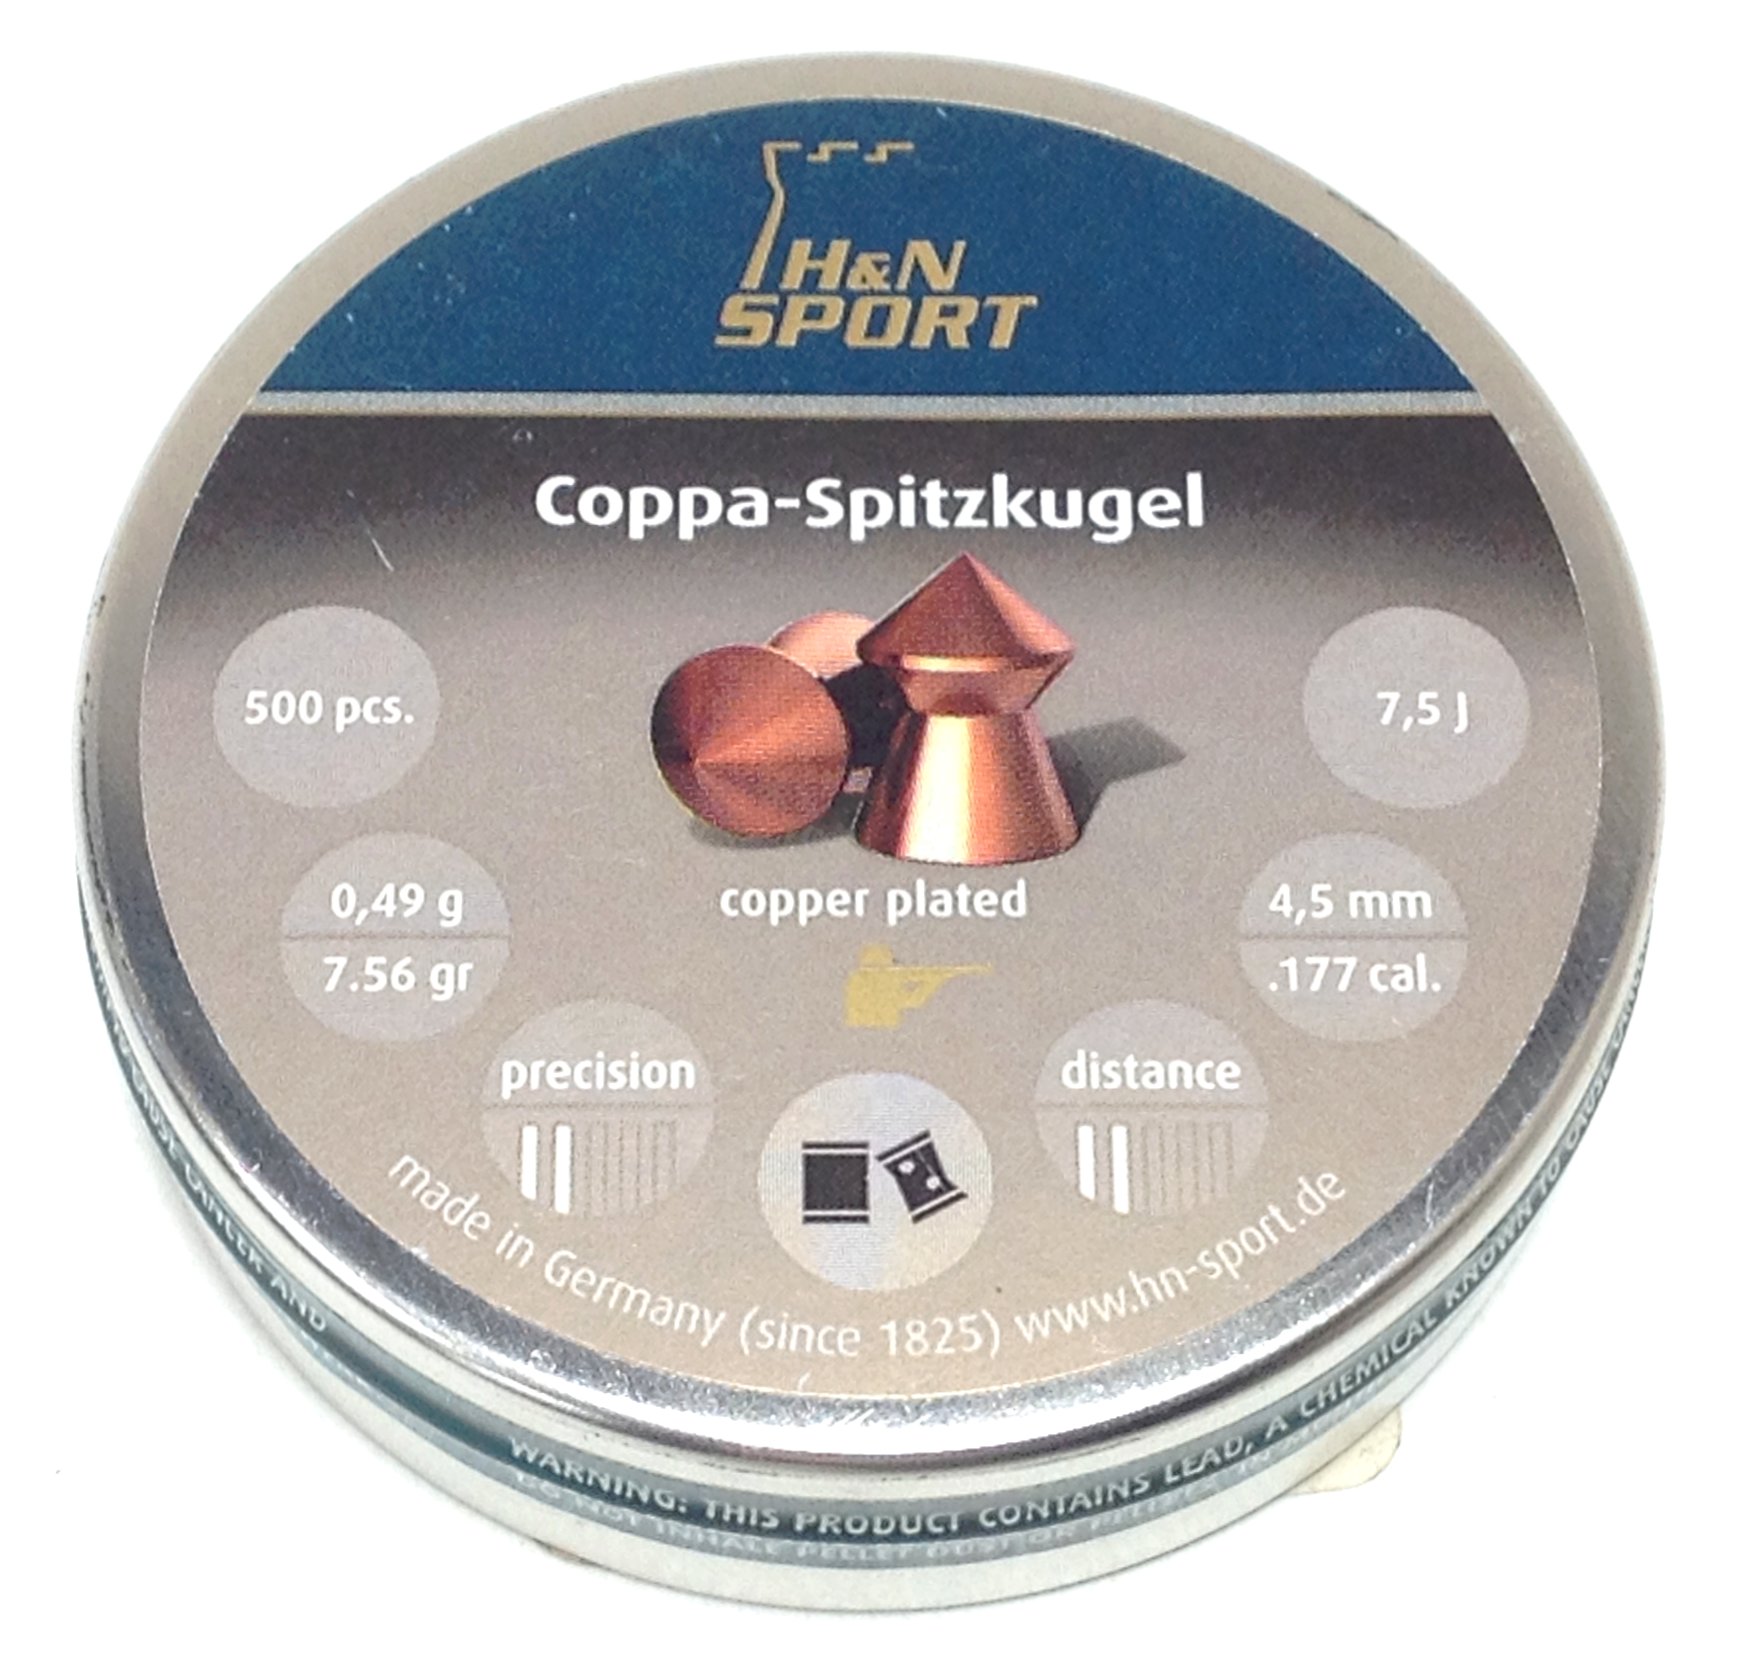 H&N Coppa-Spitzkugel .177 Copper Plated Pellets